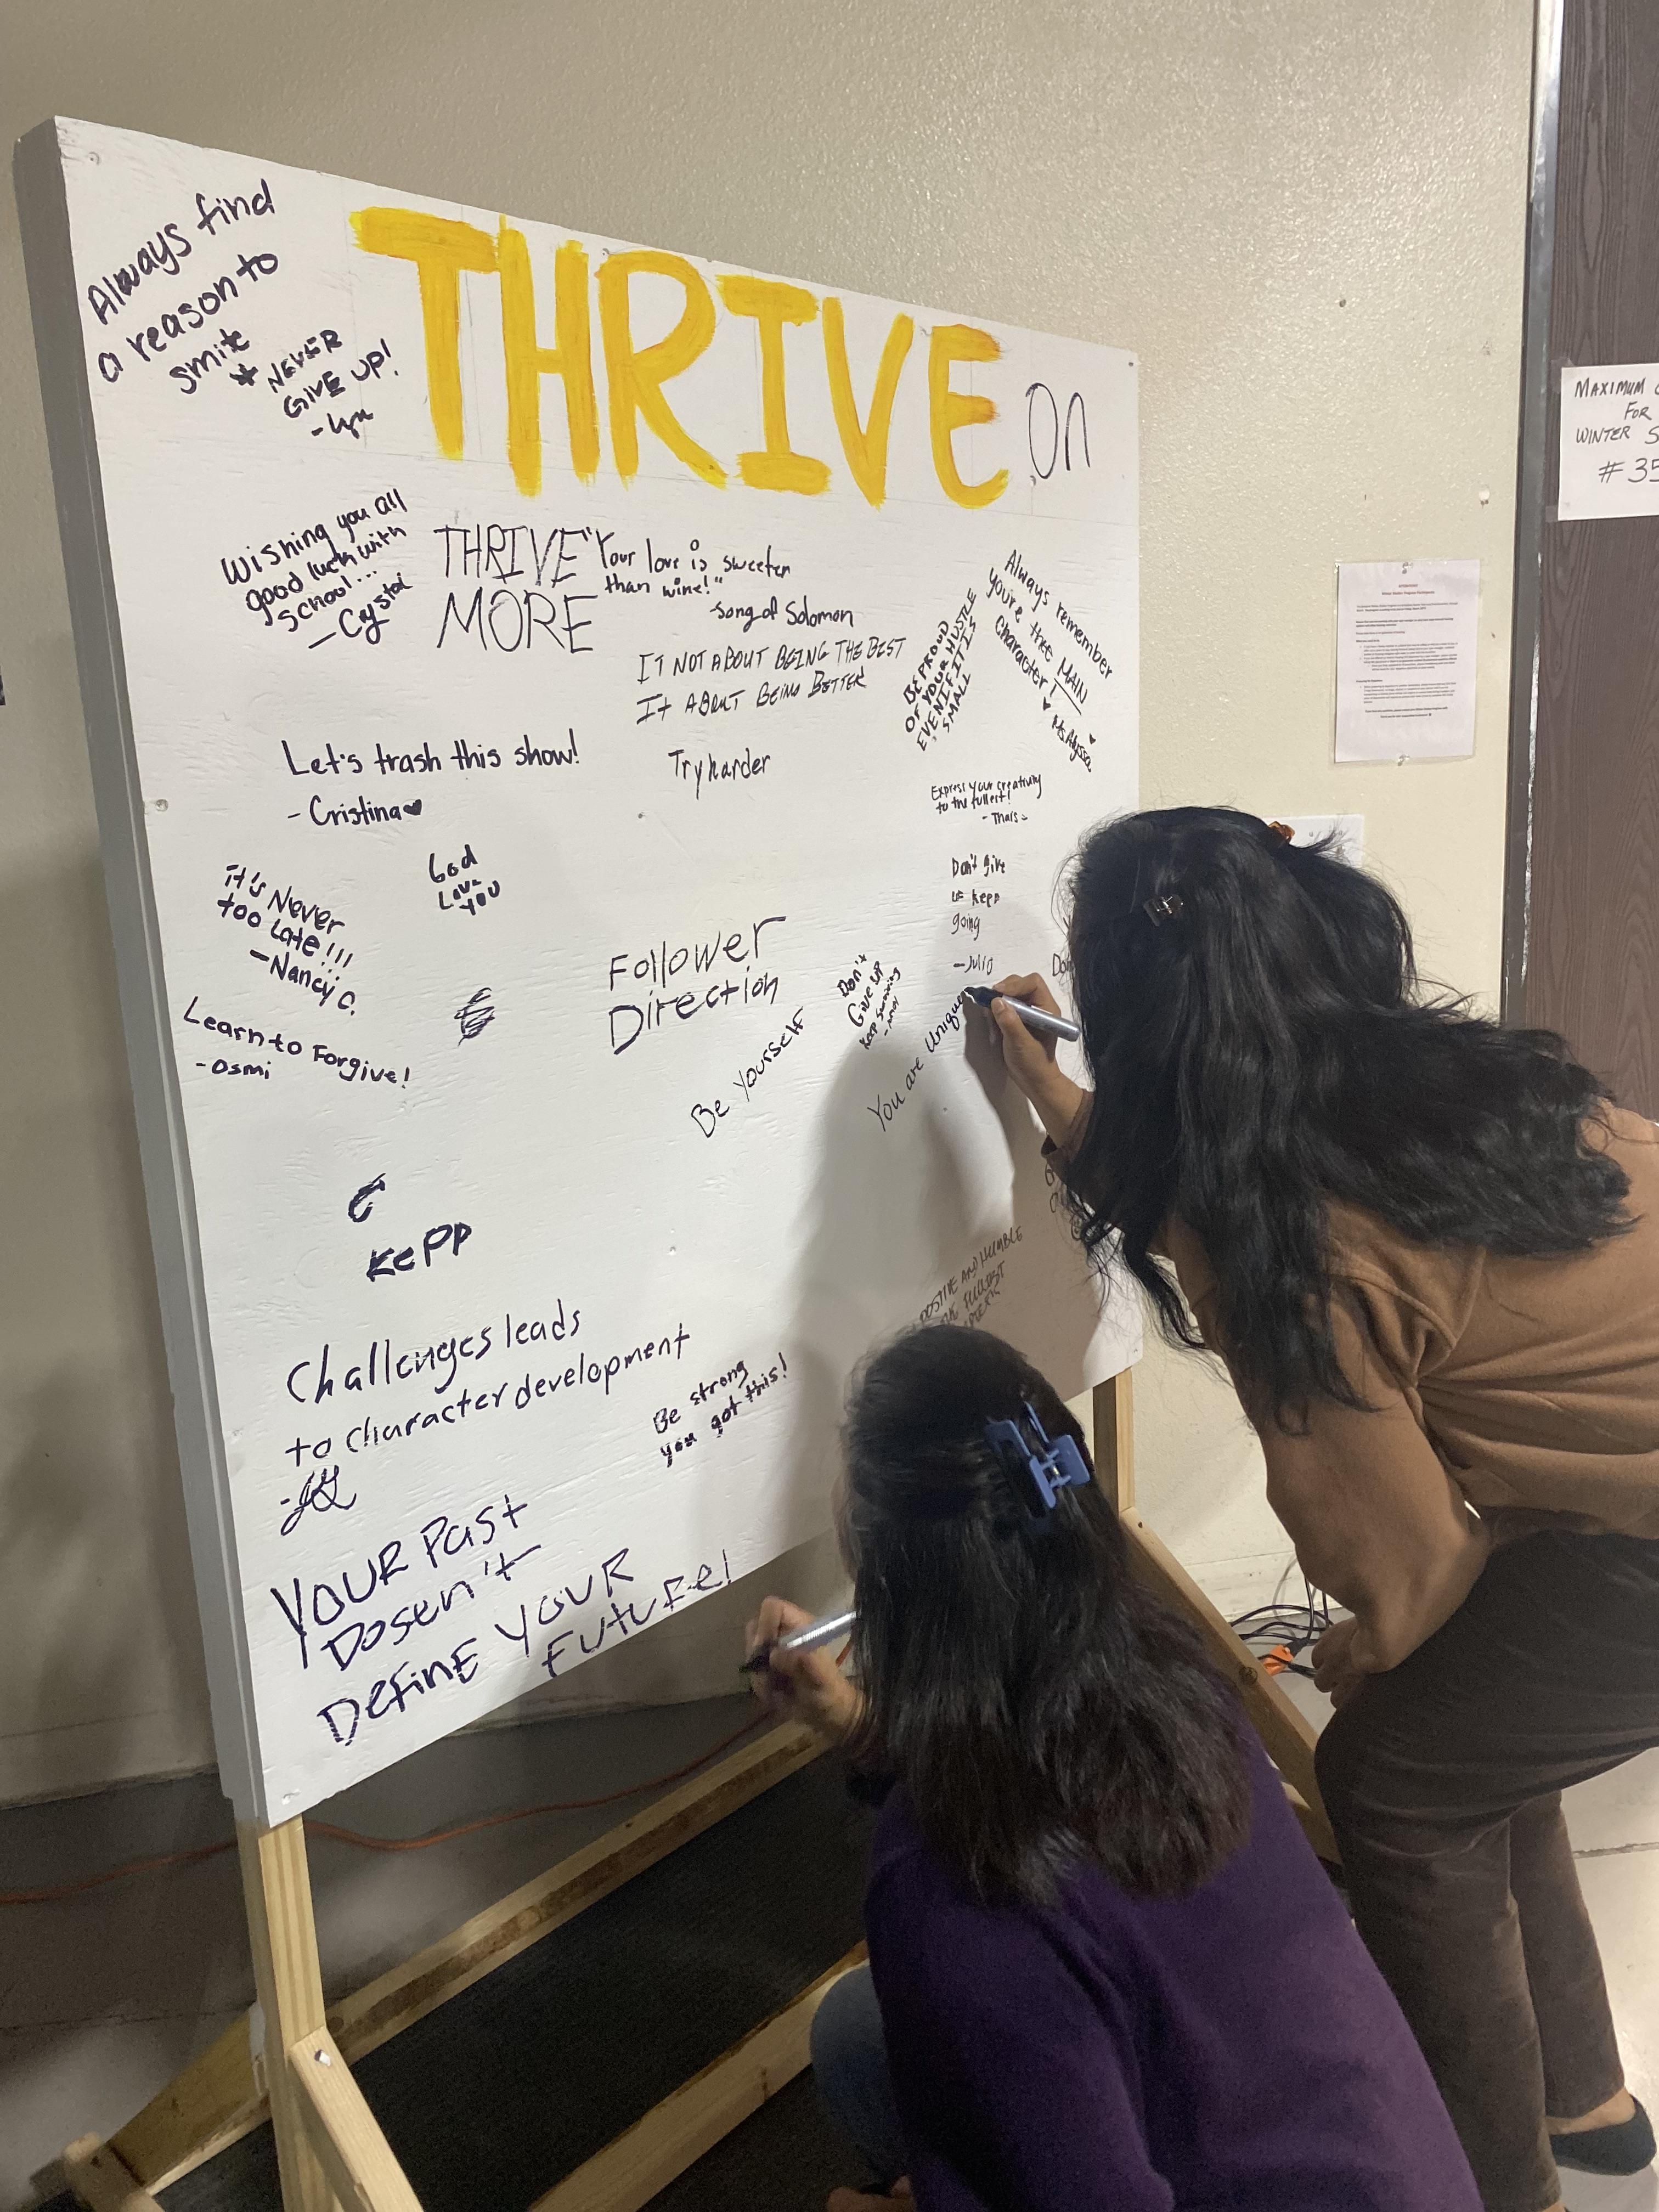 Two women write on the "Thrive" billboard